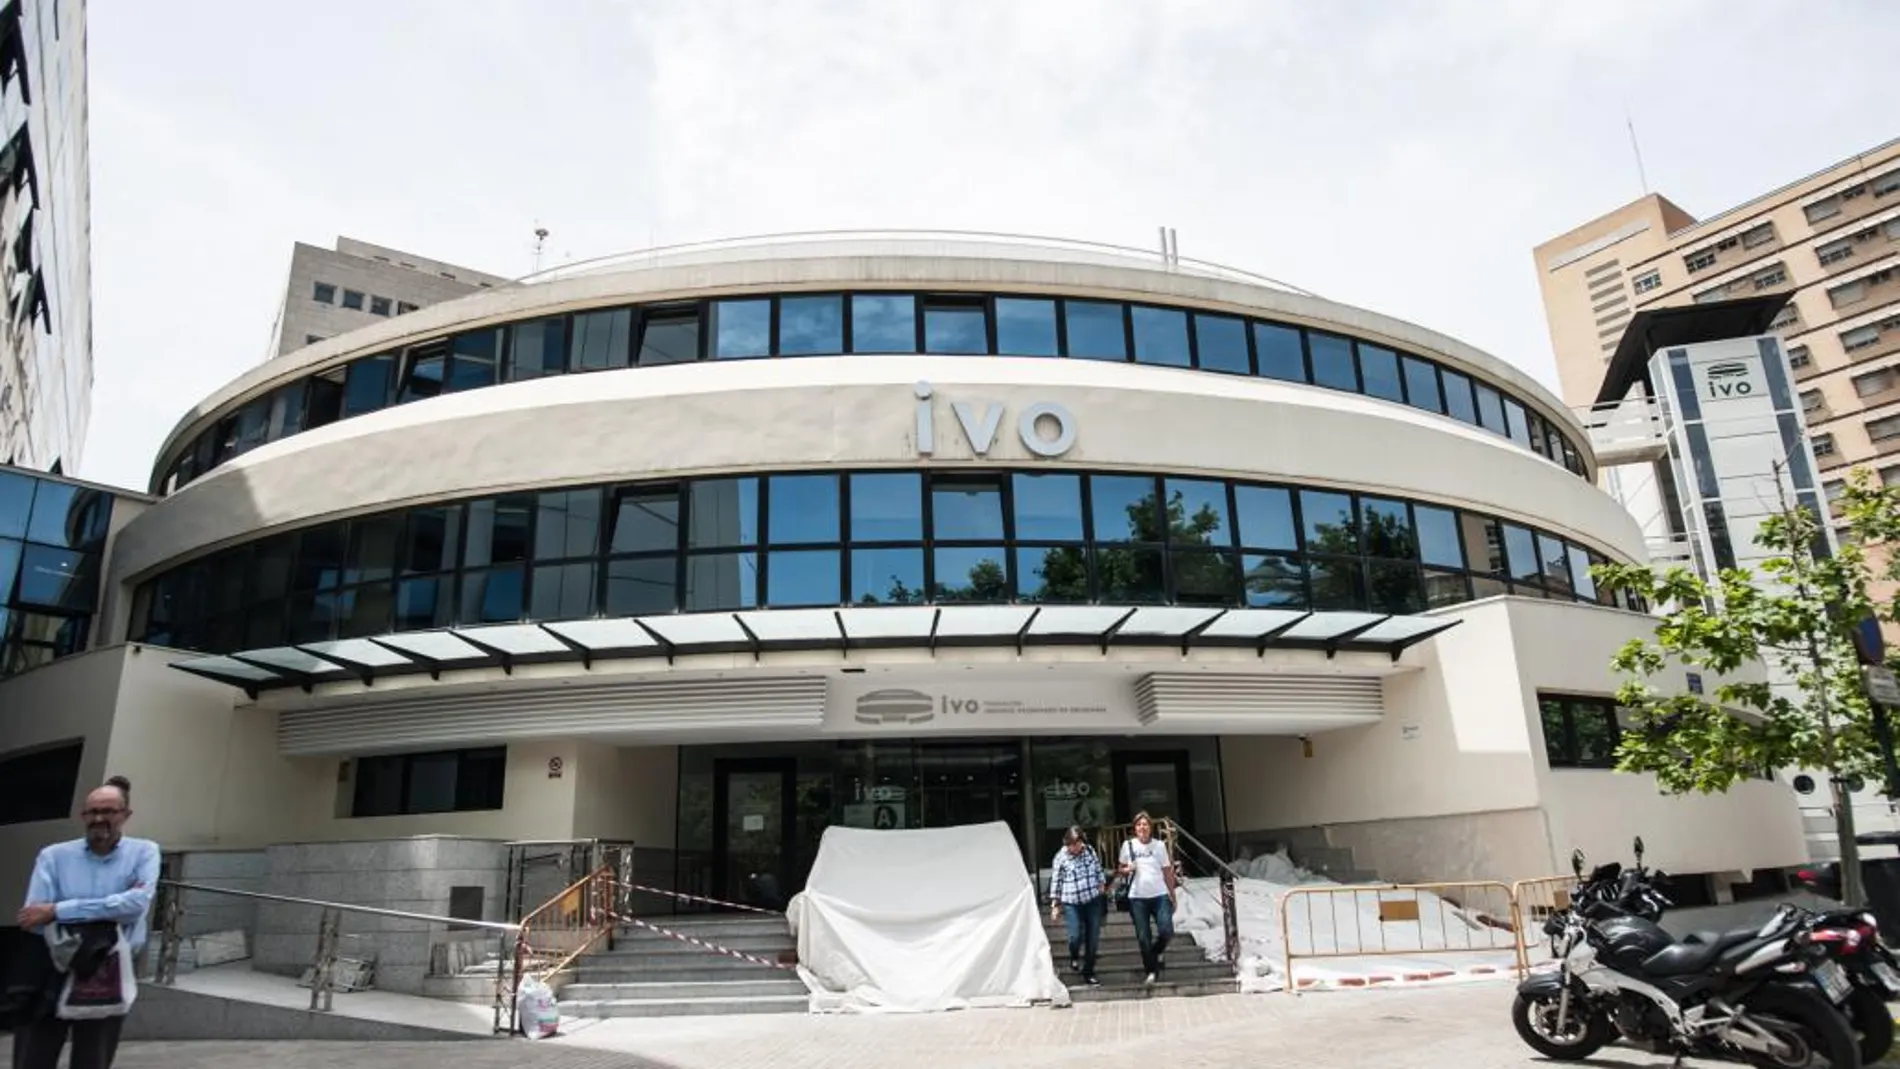 El IVO revela que existen dos informes de la Generalitat que han detectado irregularidades en las bases de la convocatoria